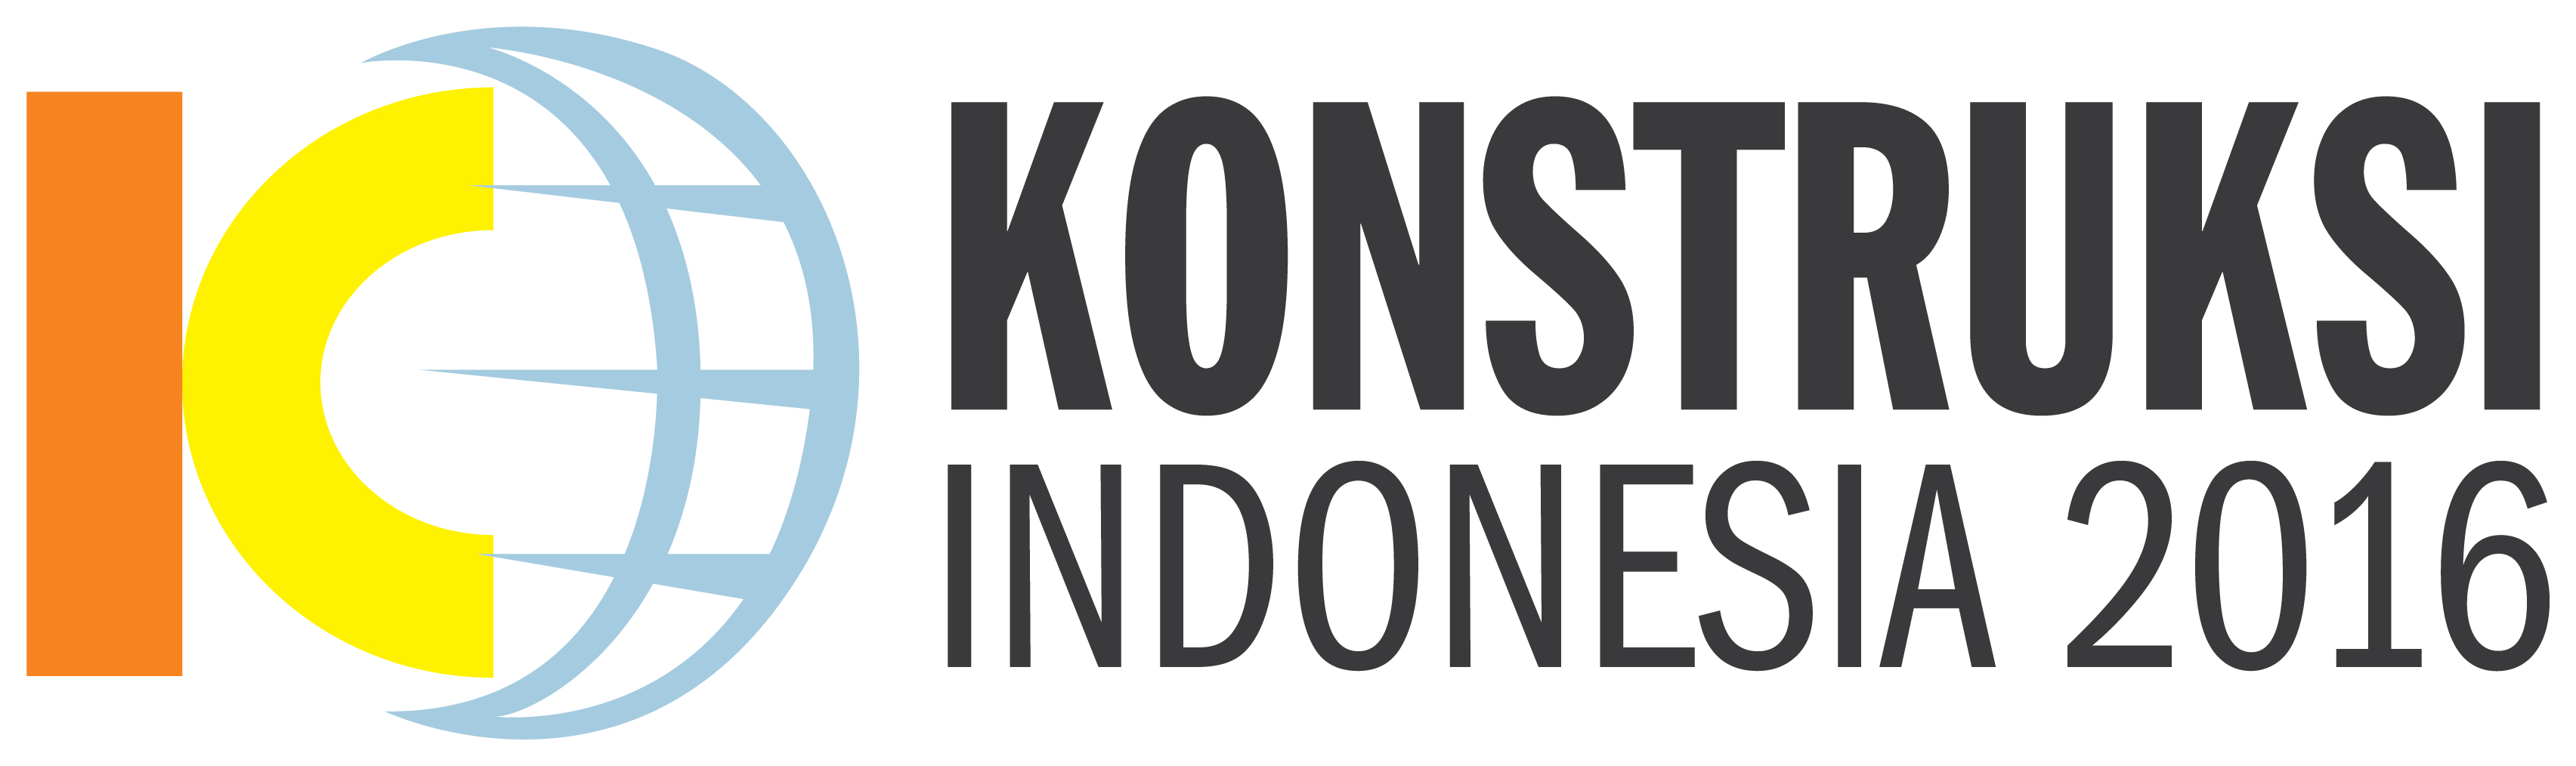 Konstruksi Indonesia 2016, Jakarta, Indonesia